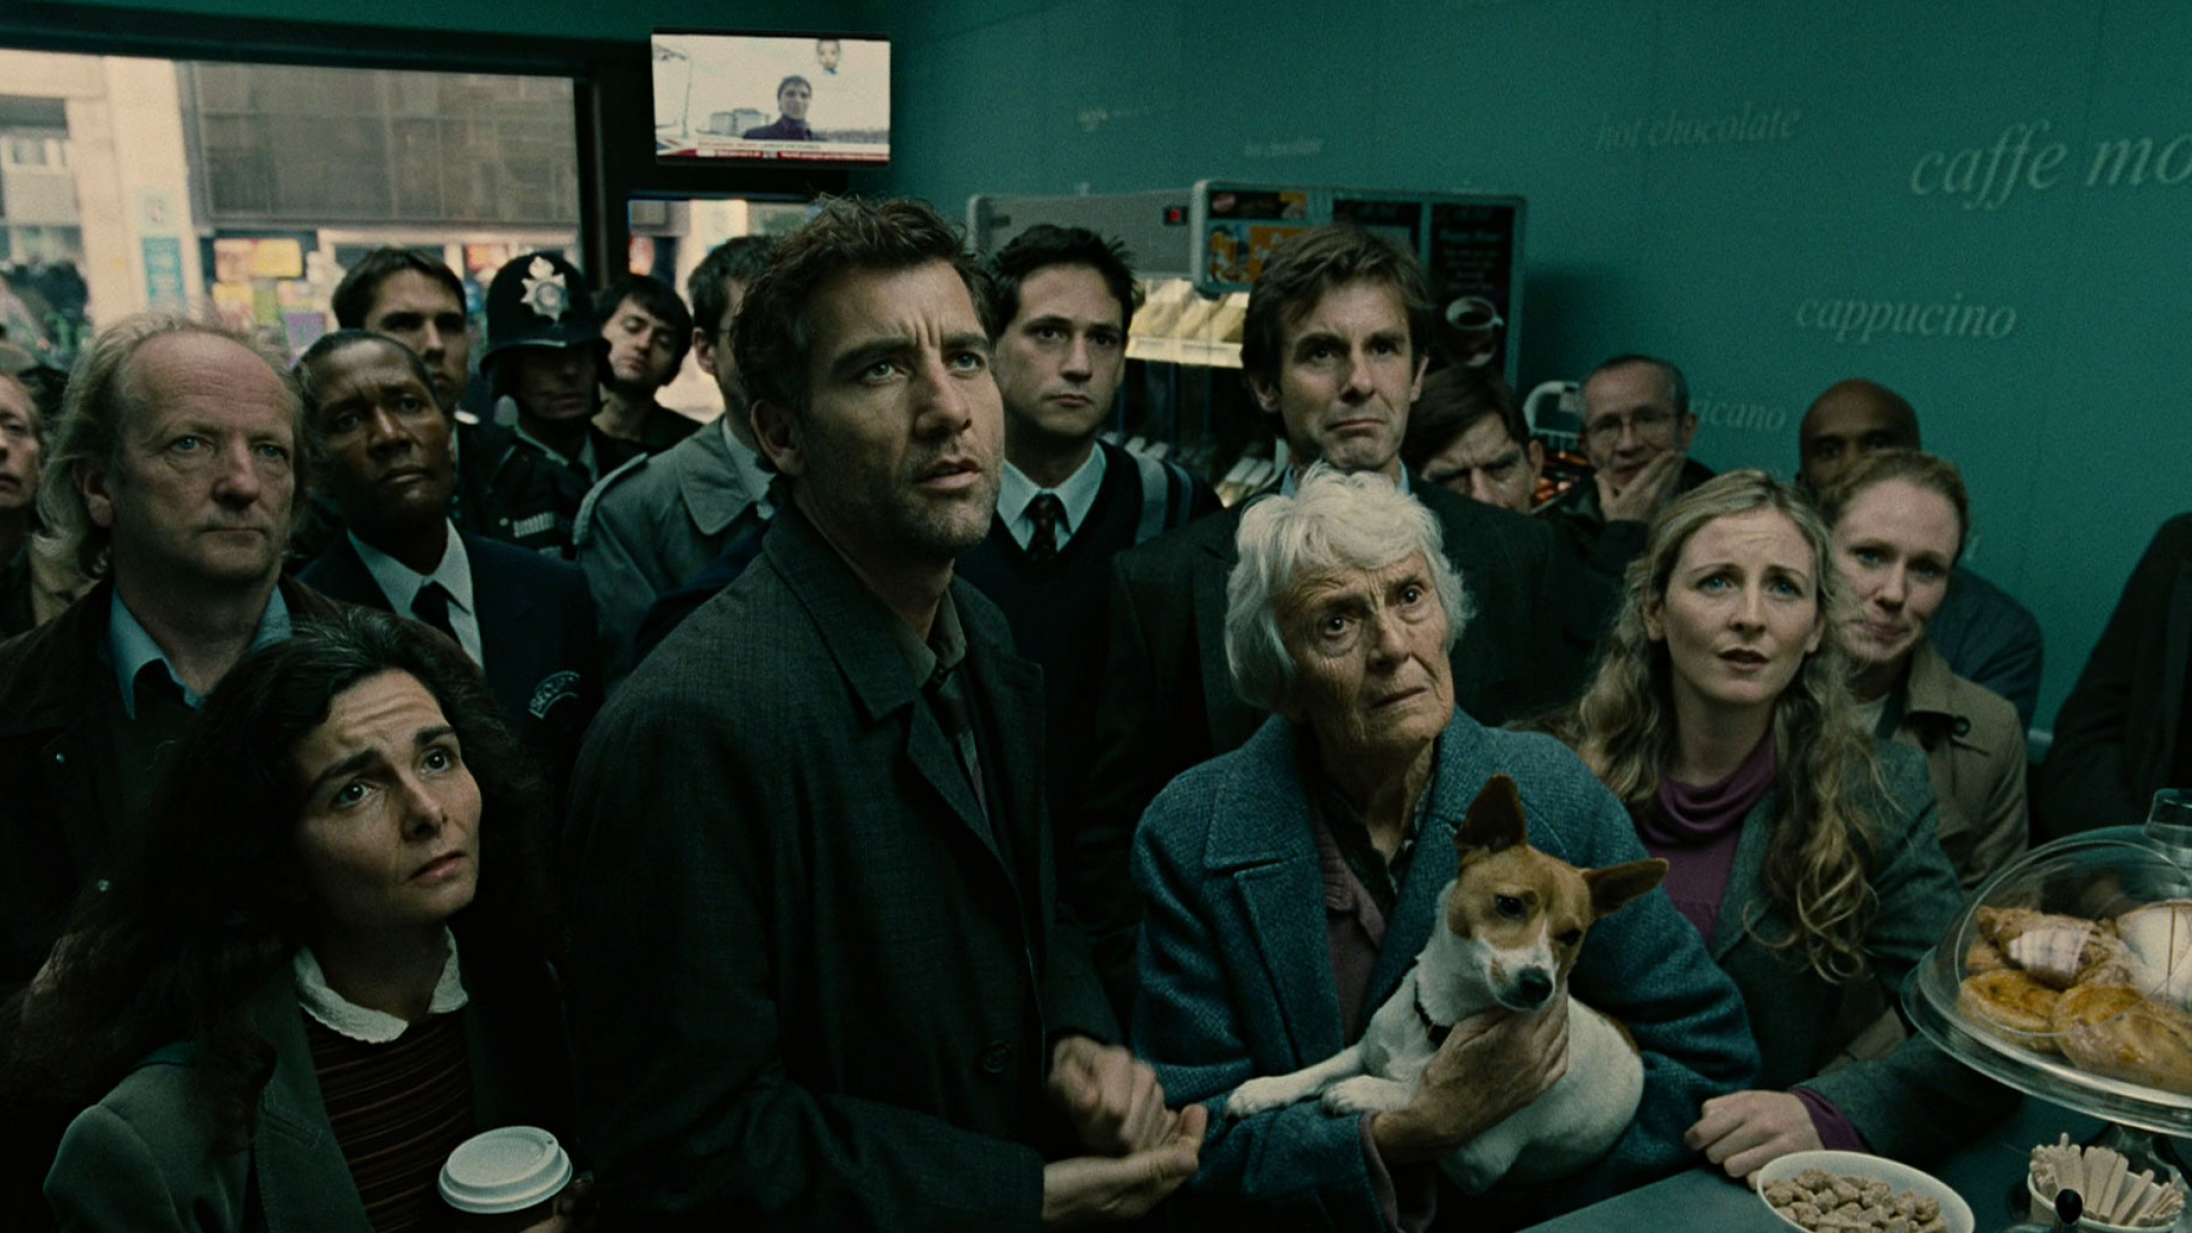 Seks postapokalyptiske film og serier, alle ’The Last of Us’-fans bør se